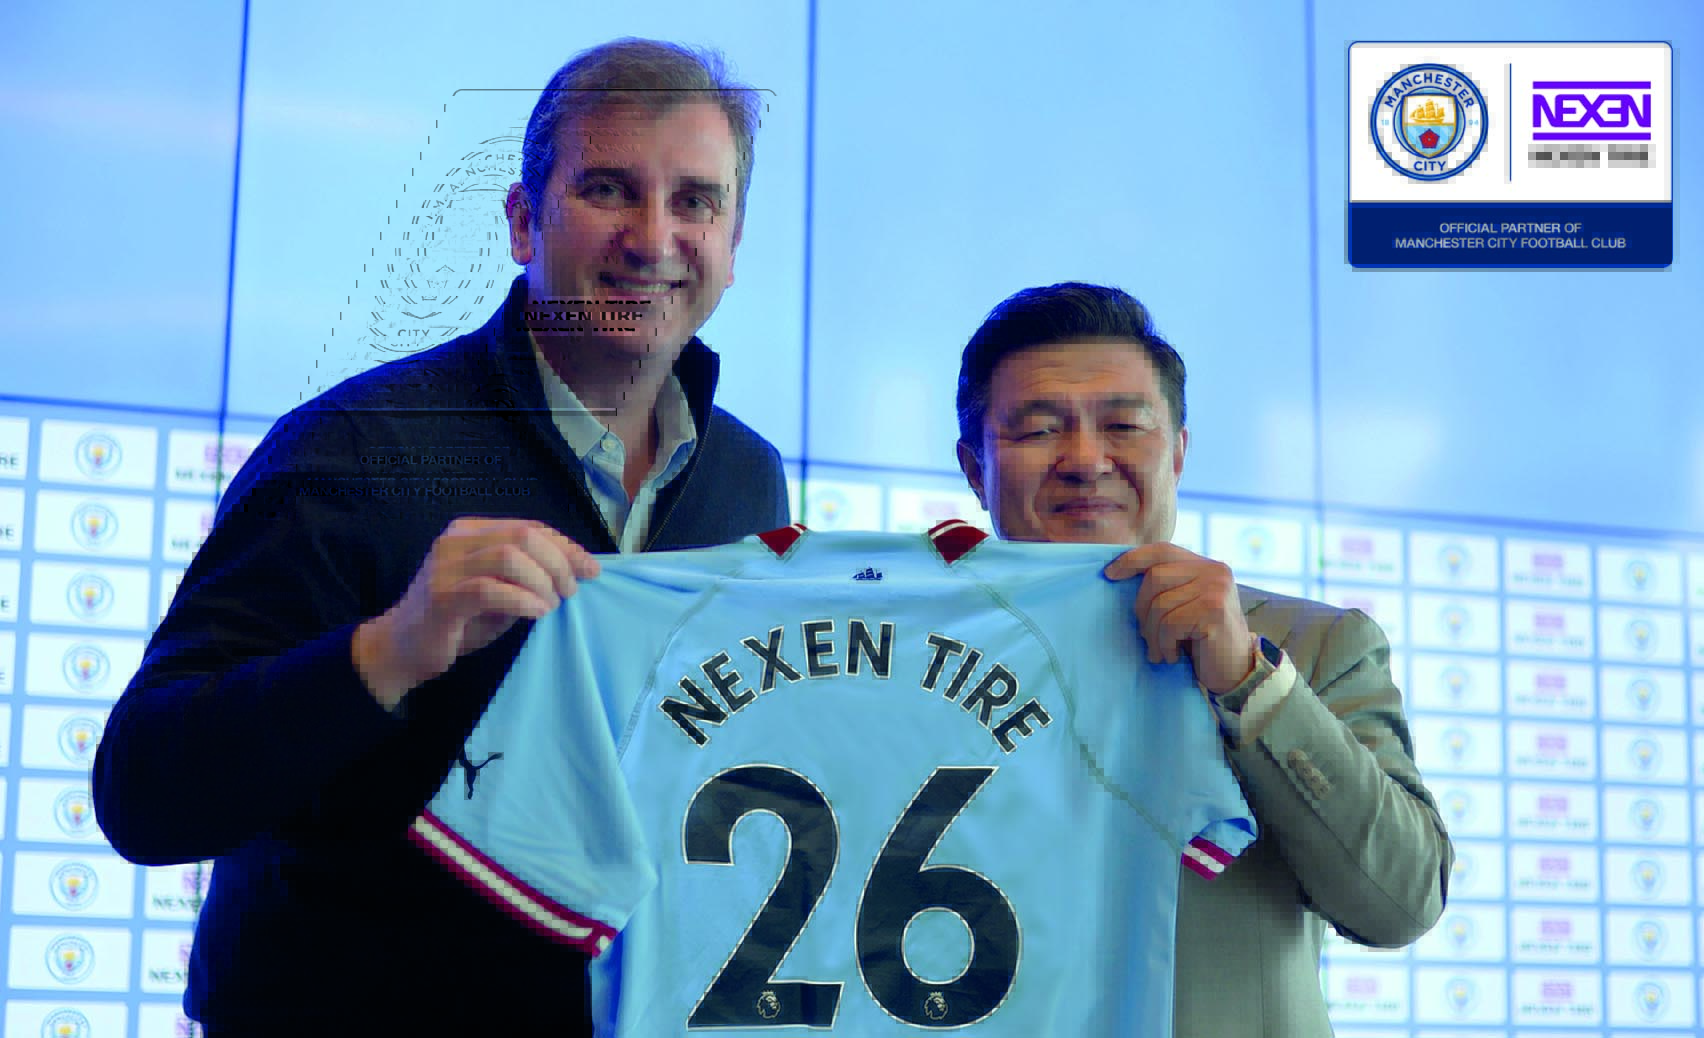 NEXEN TIRE announces milestone long-term partnership extension with Manchester city